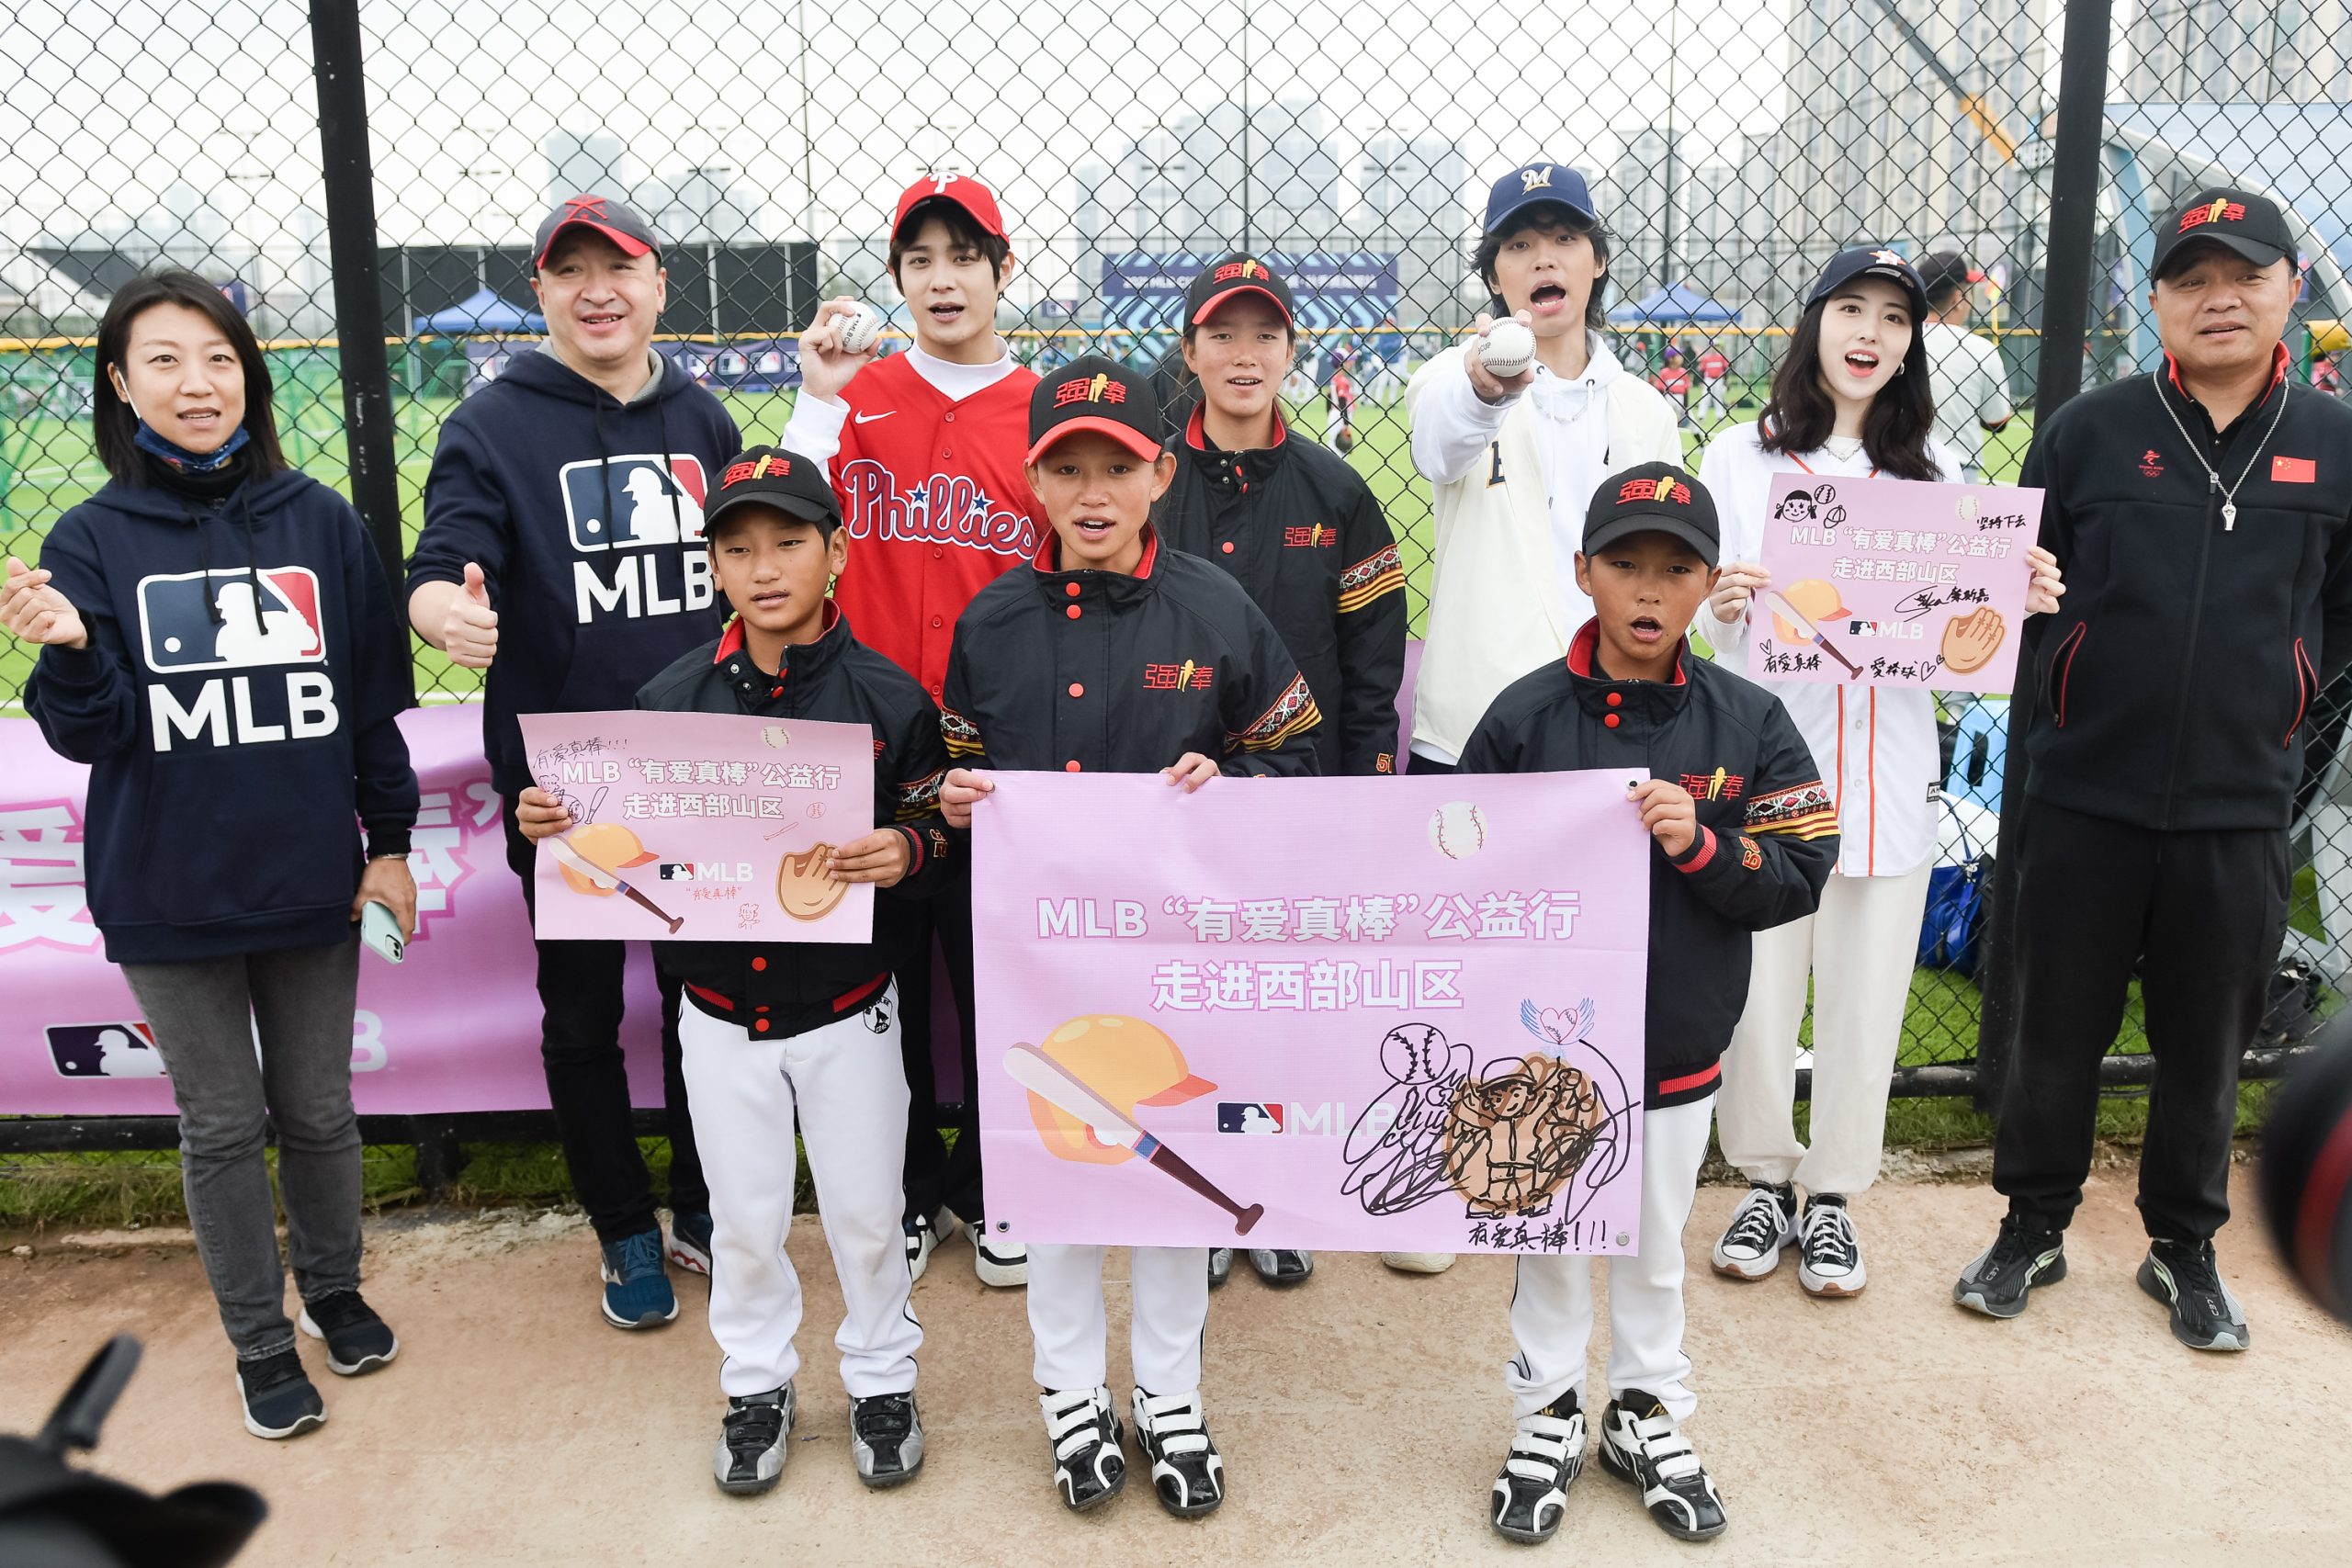 China Spring High sports phenom gets MLB treatment at The Dream Series